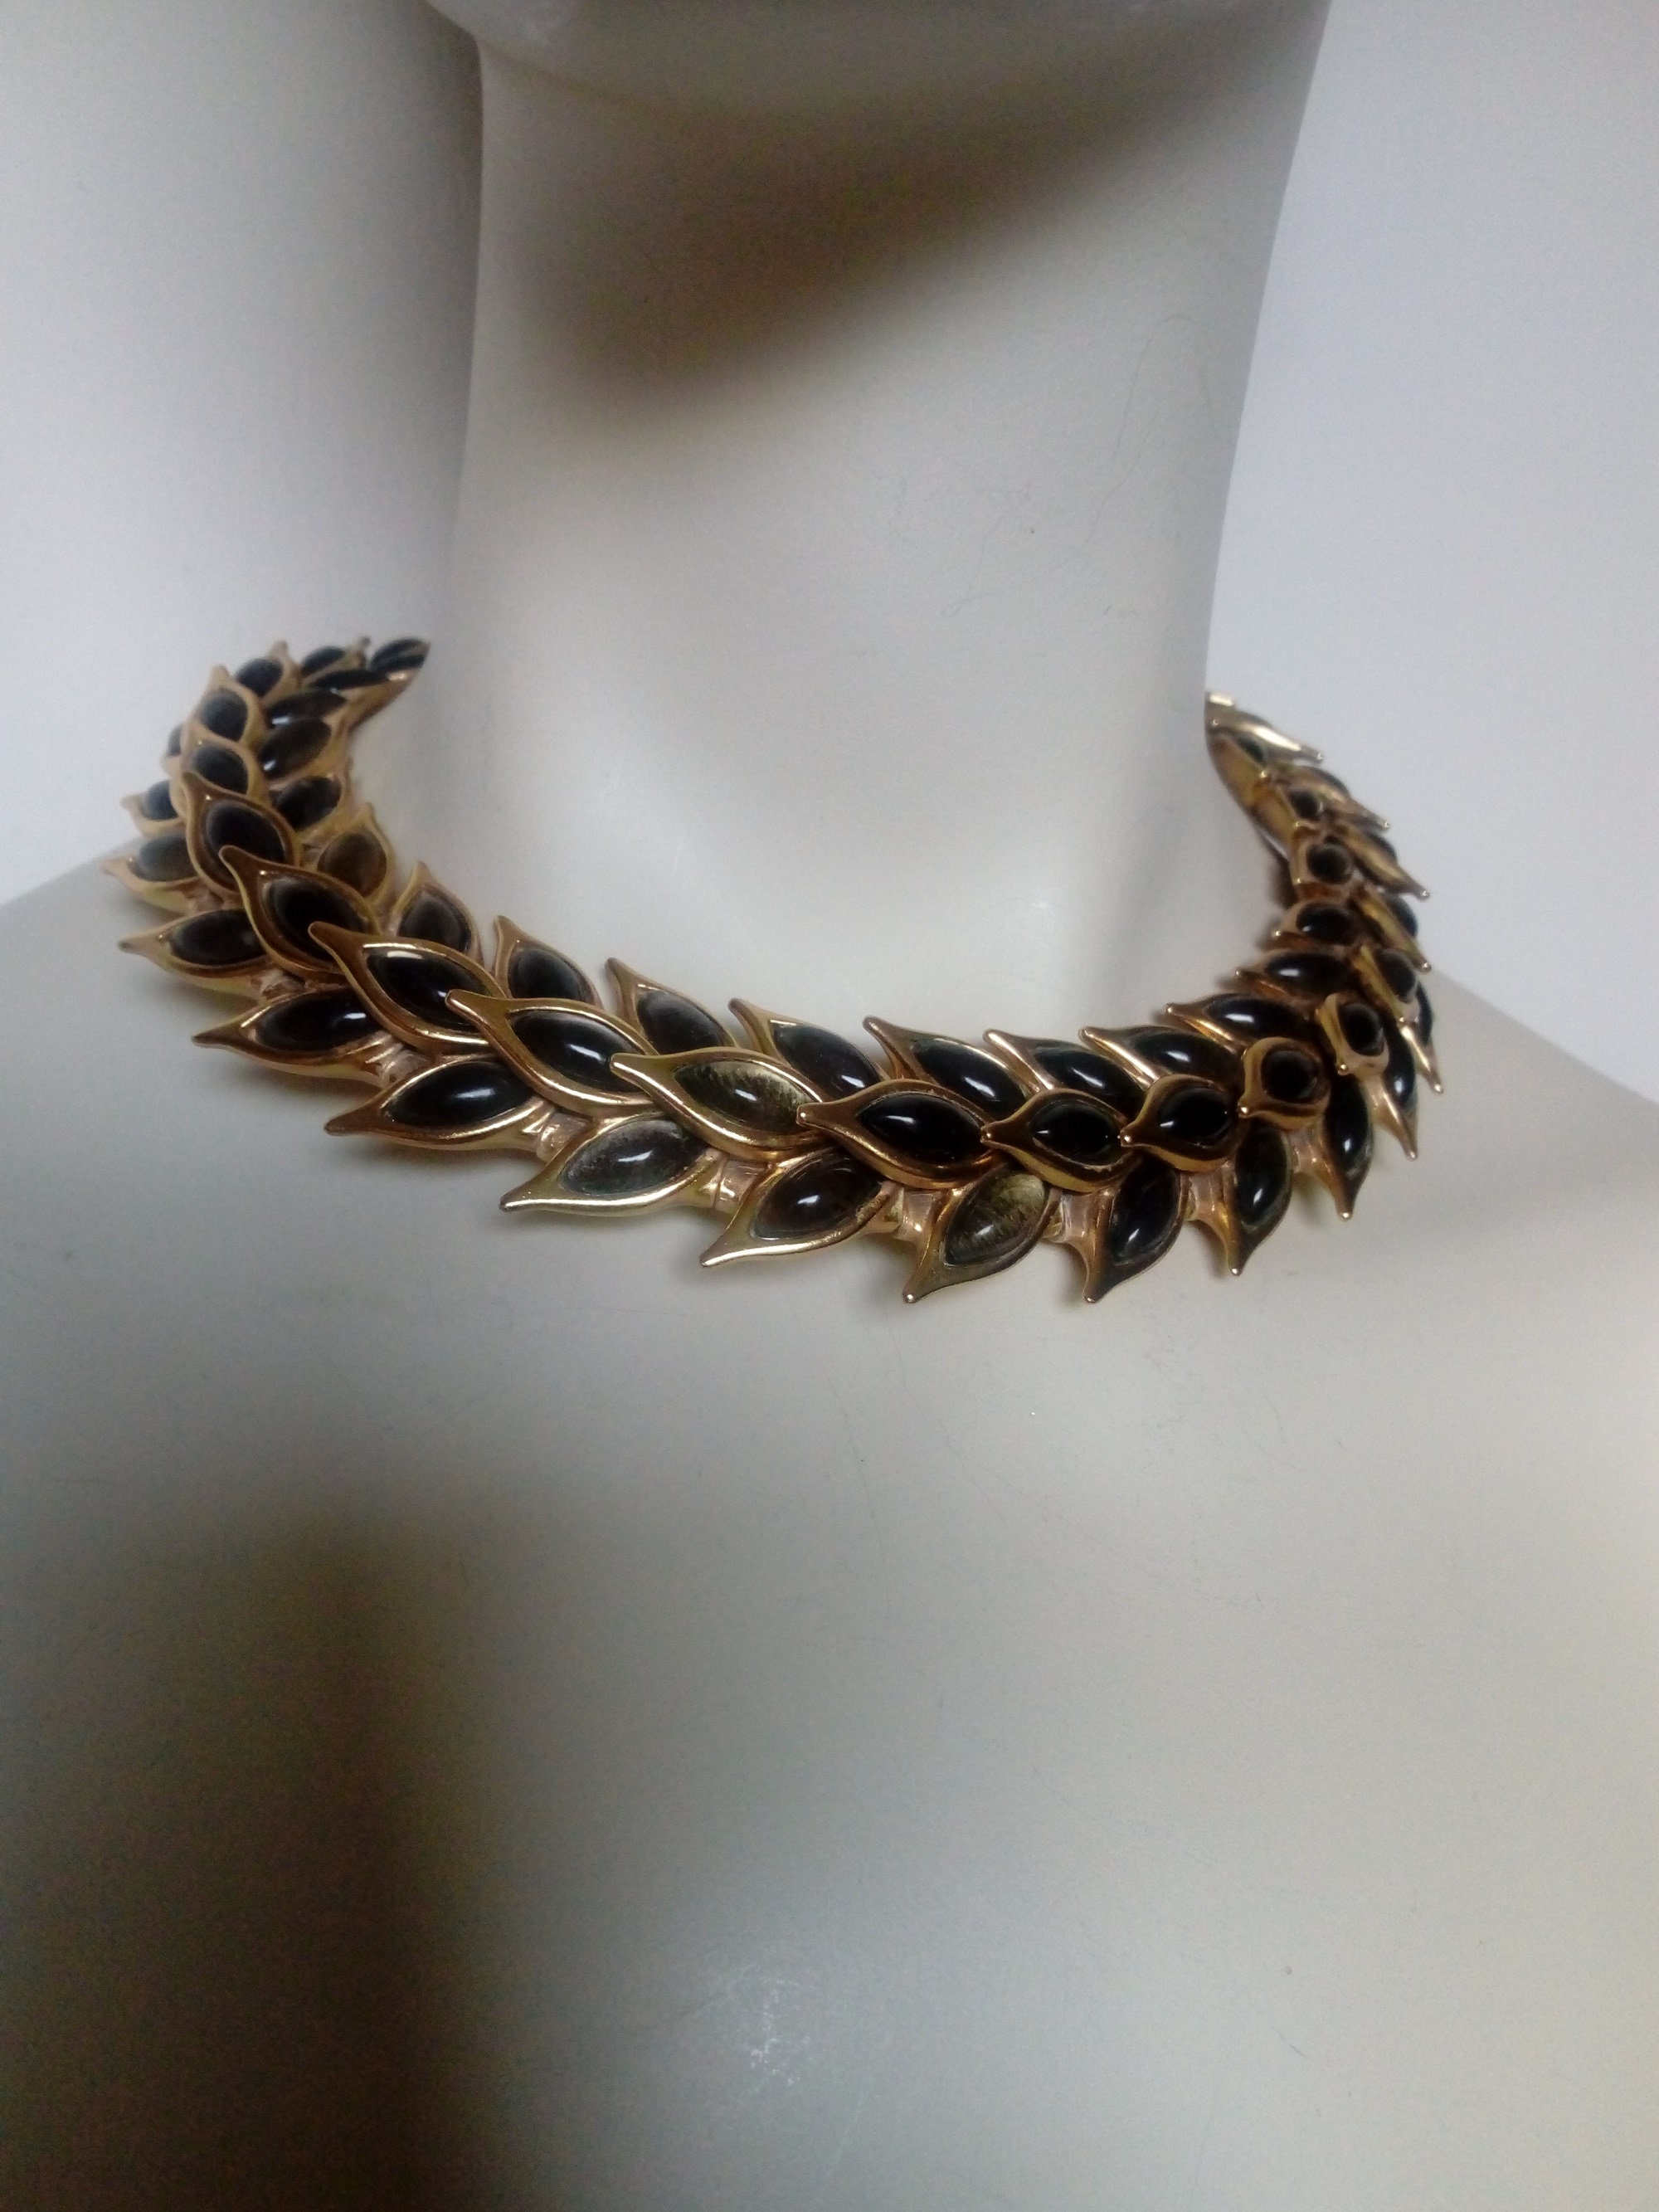 Long wheat chain necklace in metal, Saint Laurent